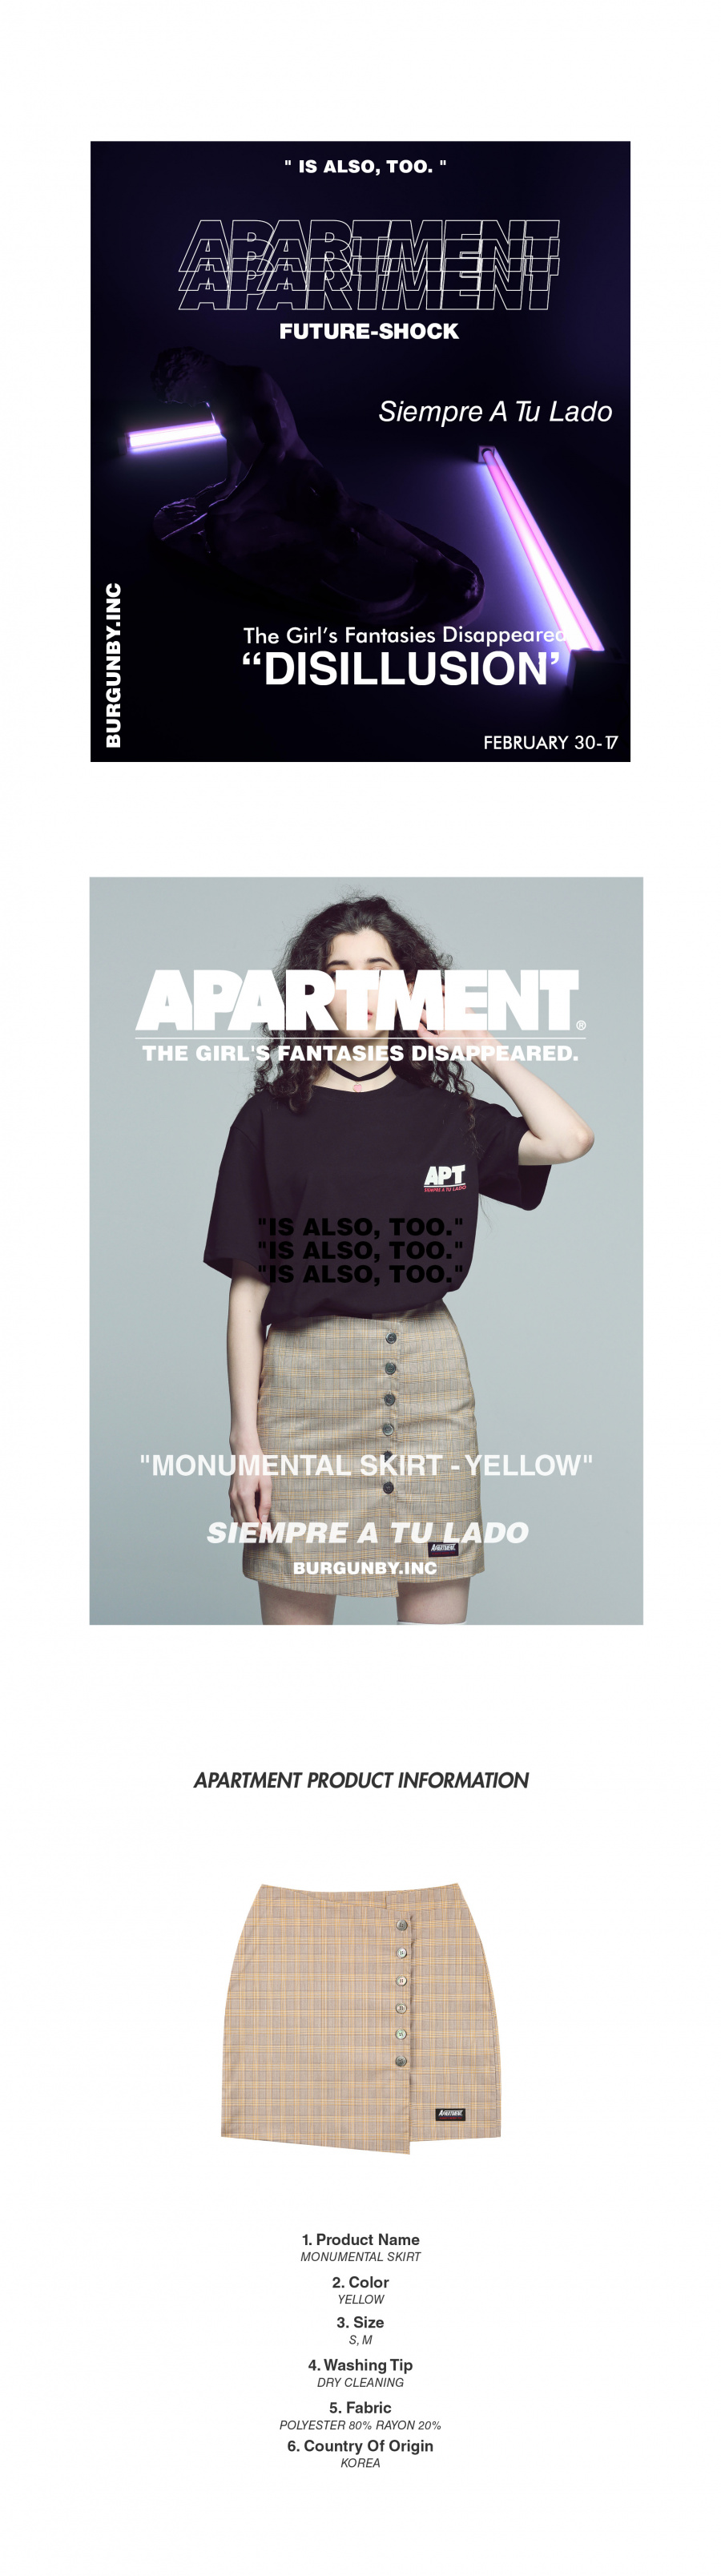 Monumental Skirt - Yellow.jpg